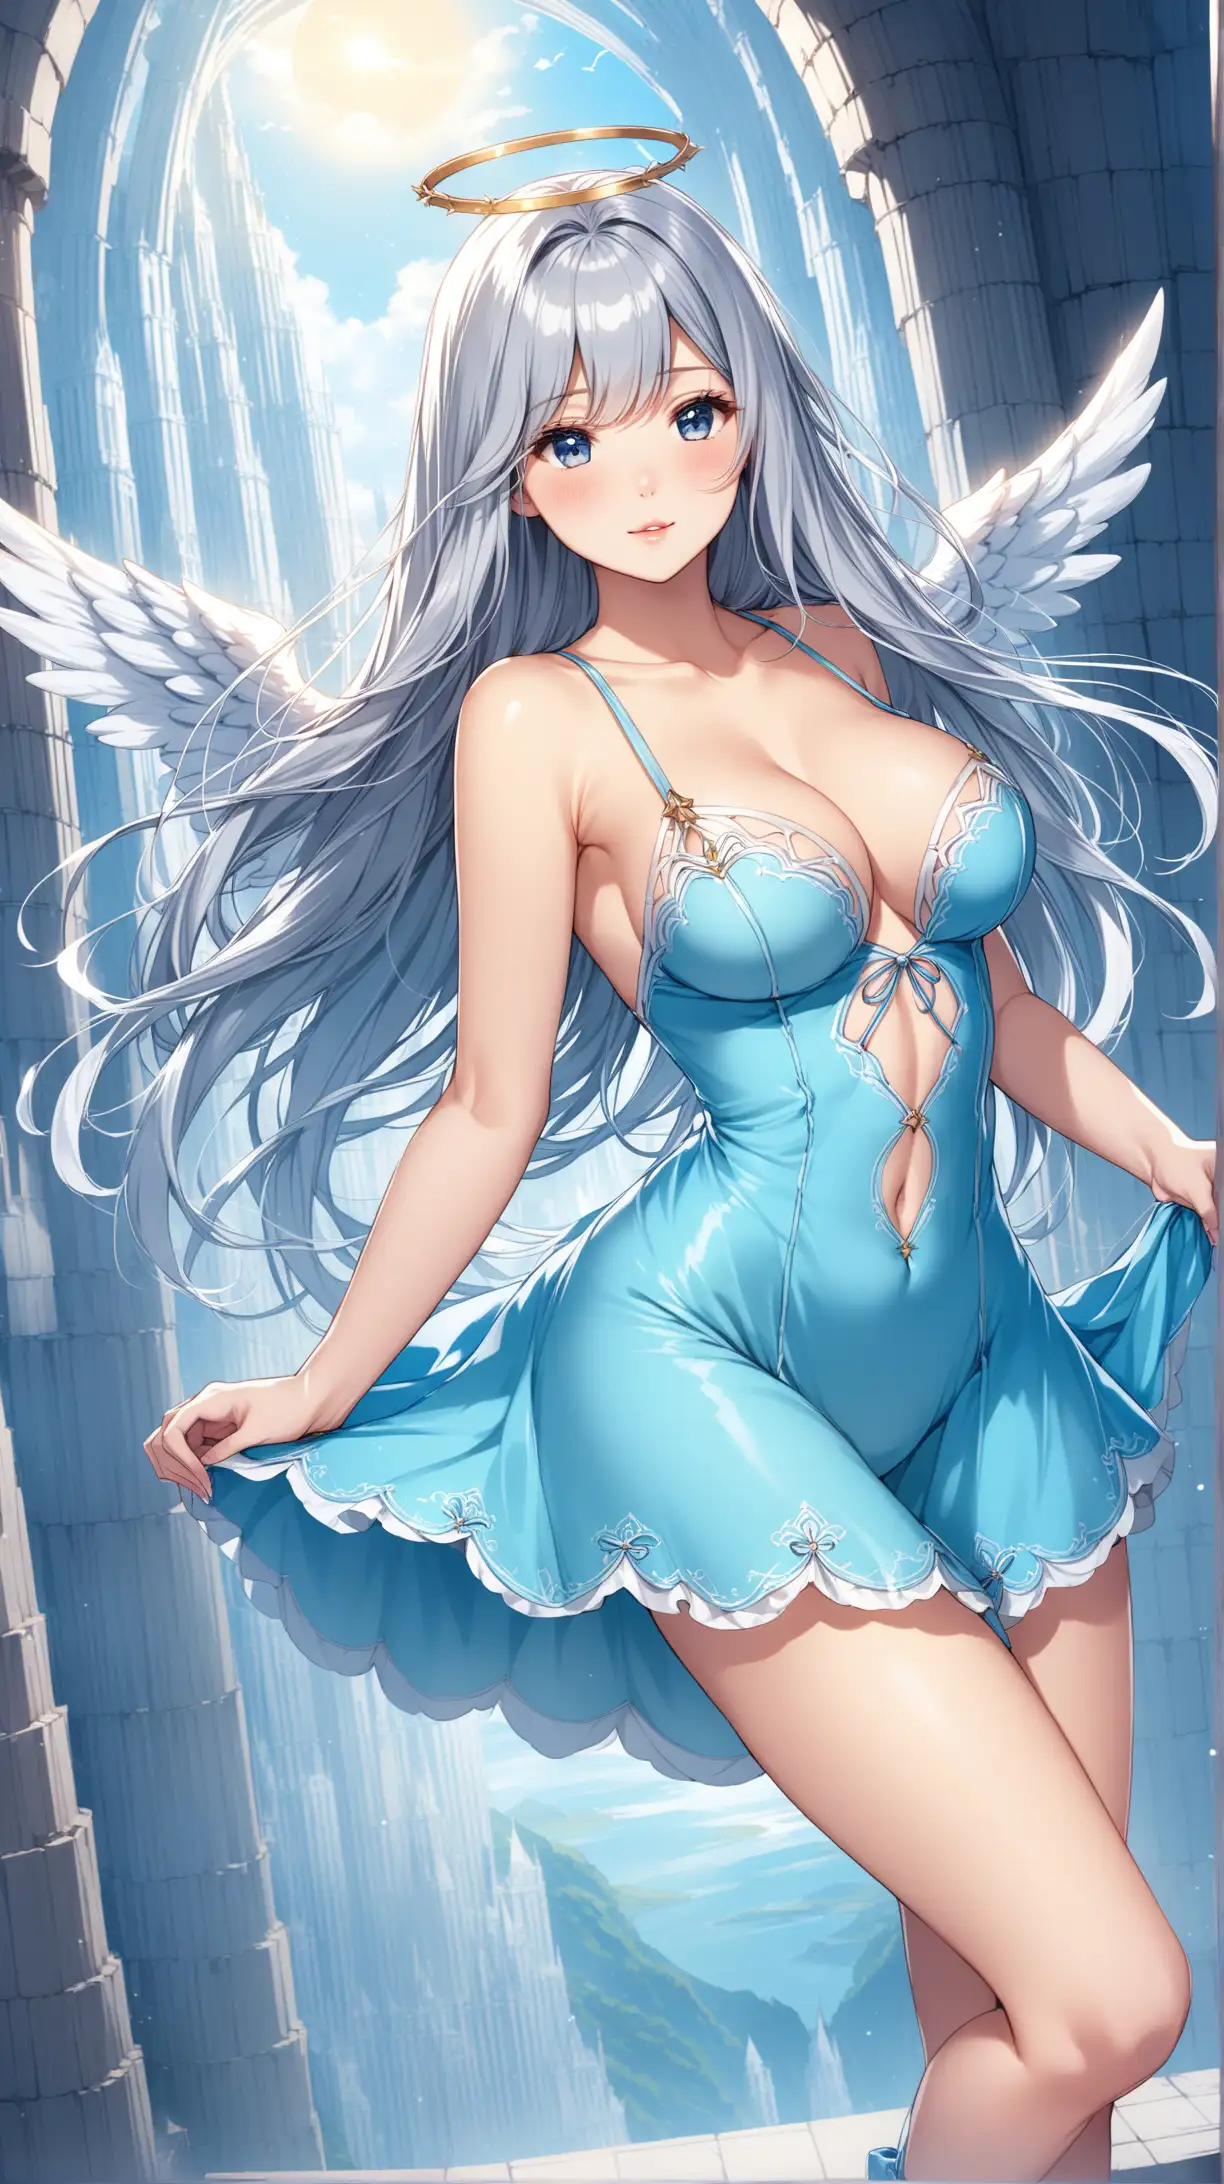 Sexy women, angel costume, light grey long hair, blue short dress, fantastic background 